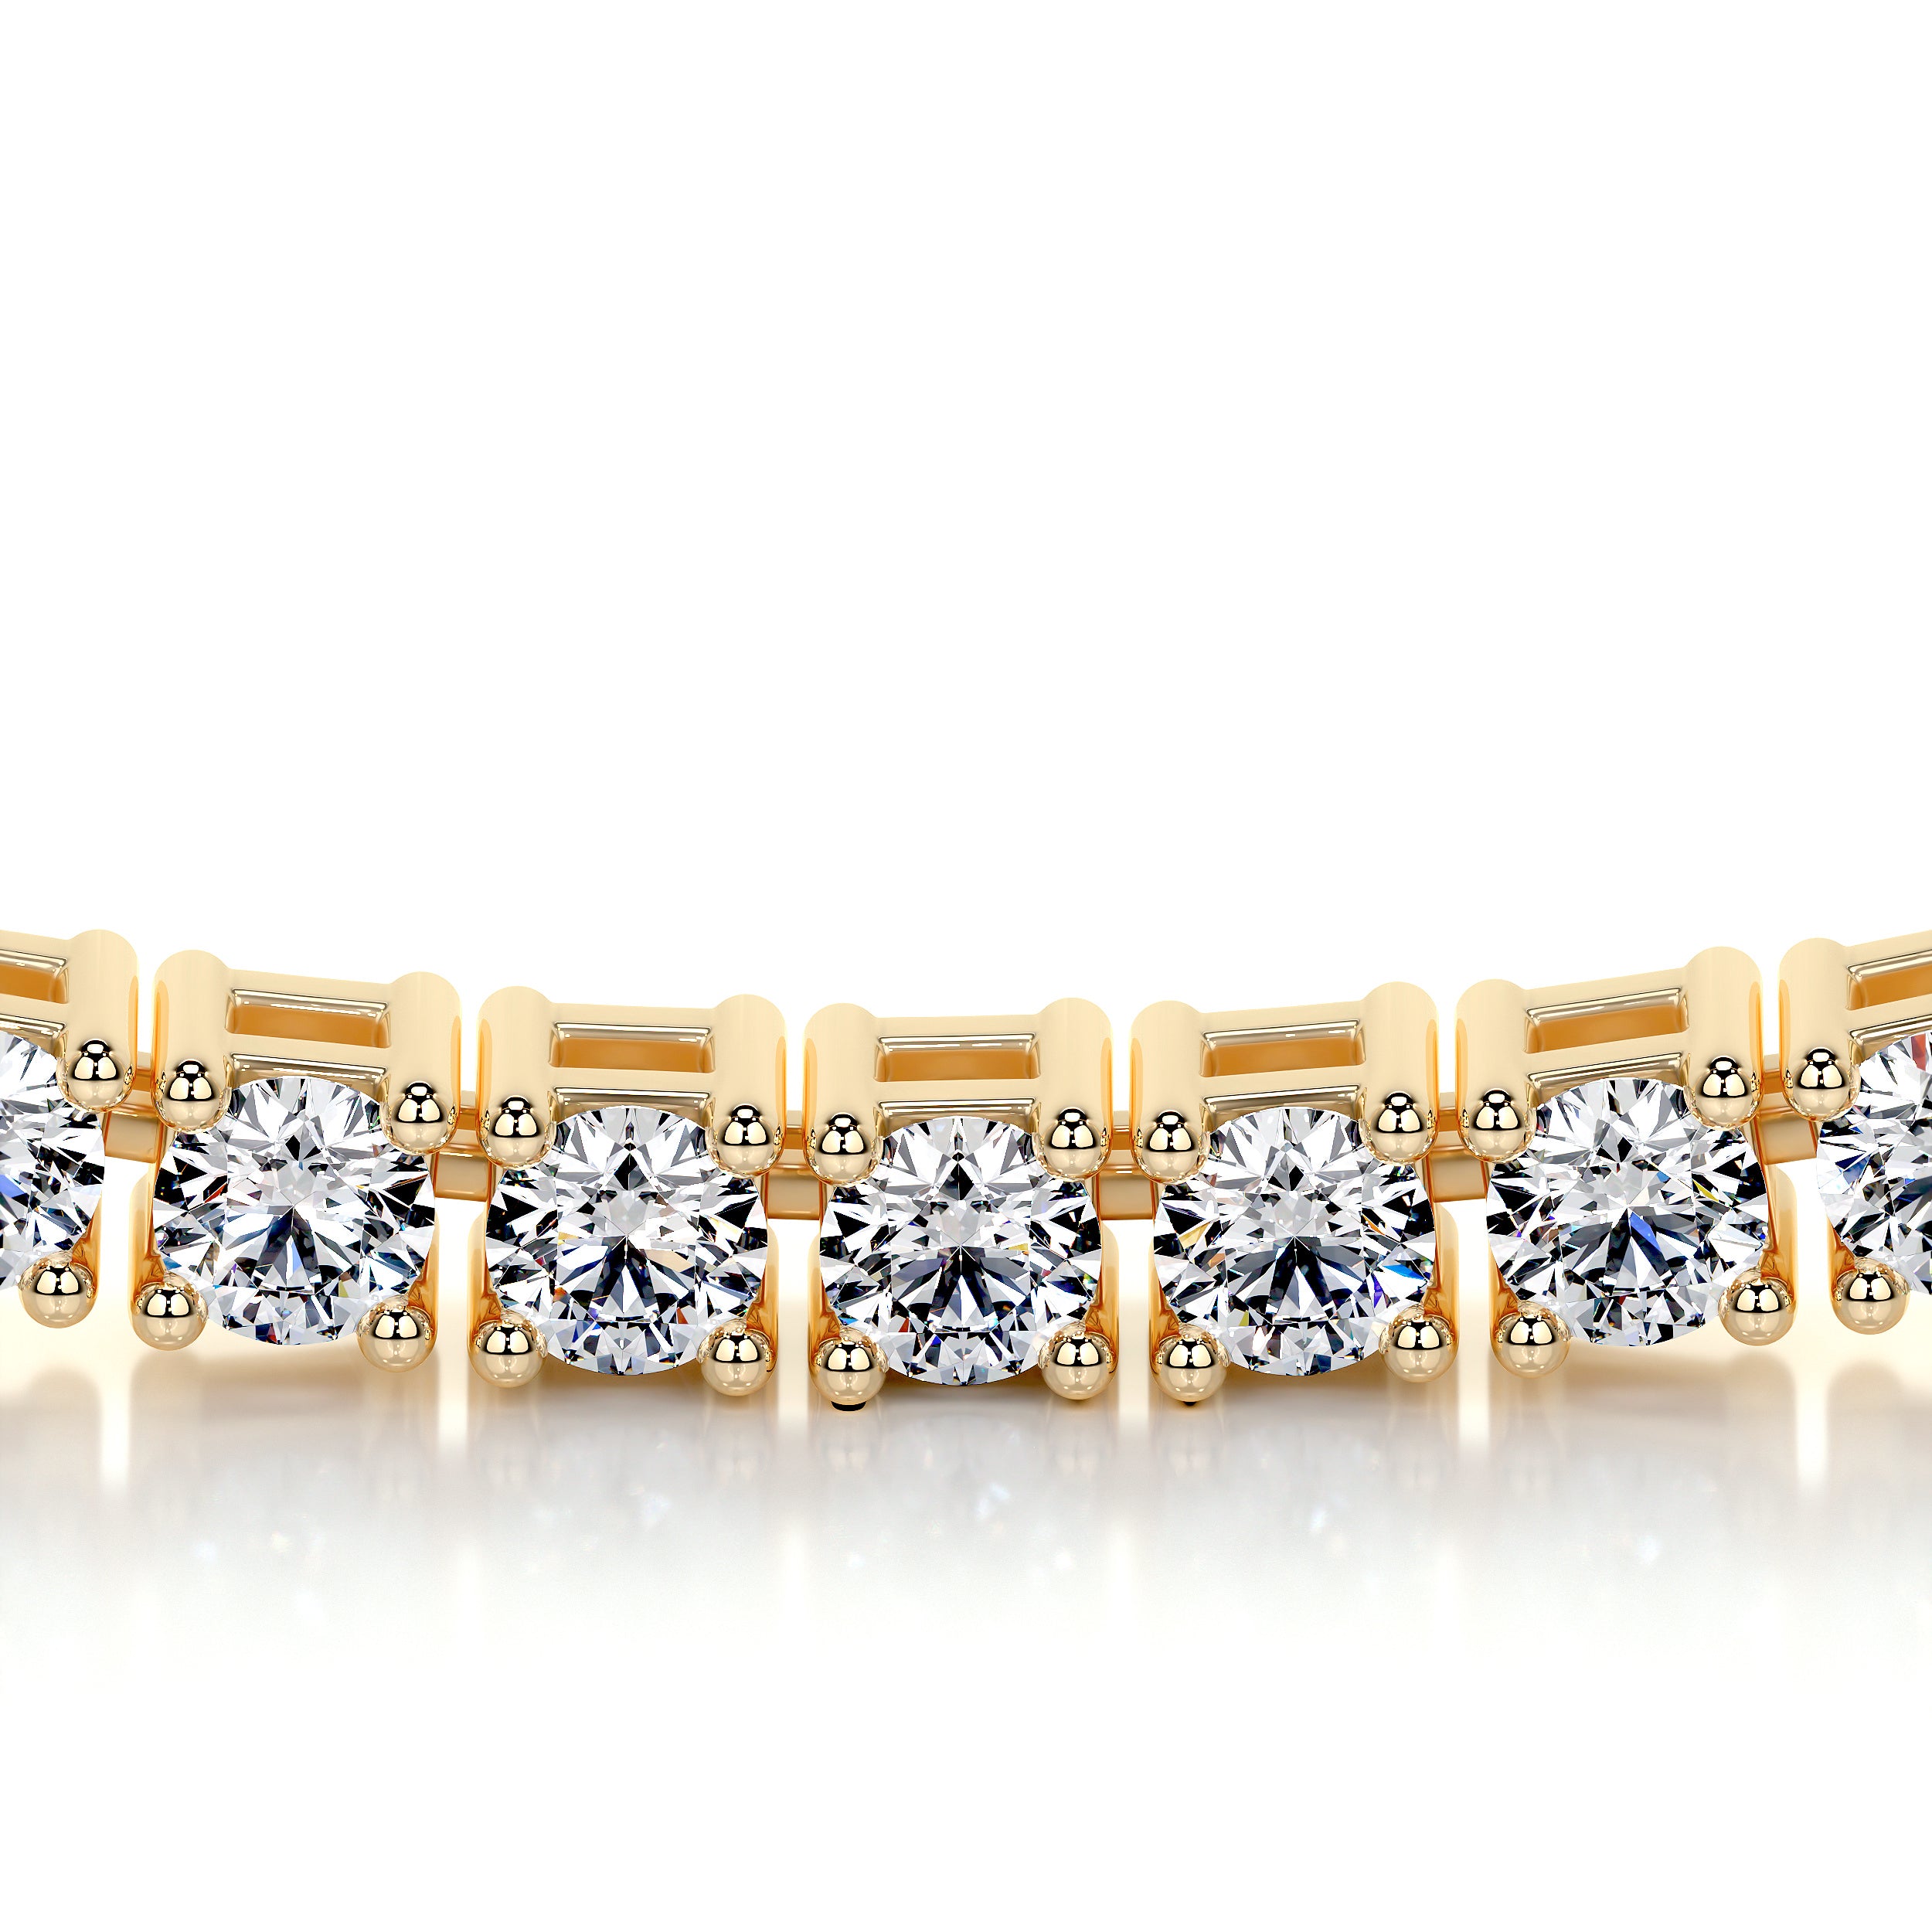 Callie Diamond Tennis Necklace Collier   (6.00 Carat) -18K Yellow Gold